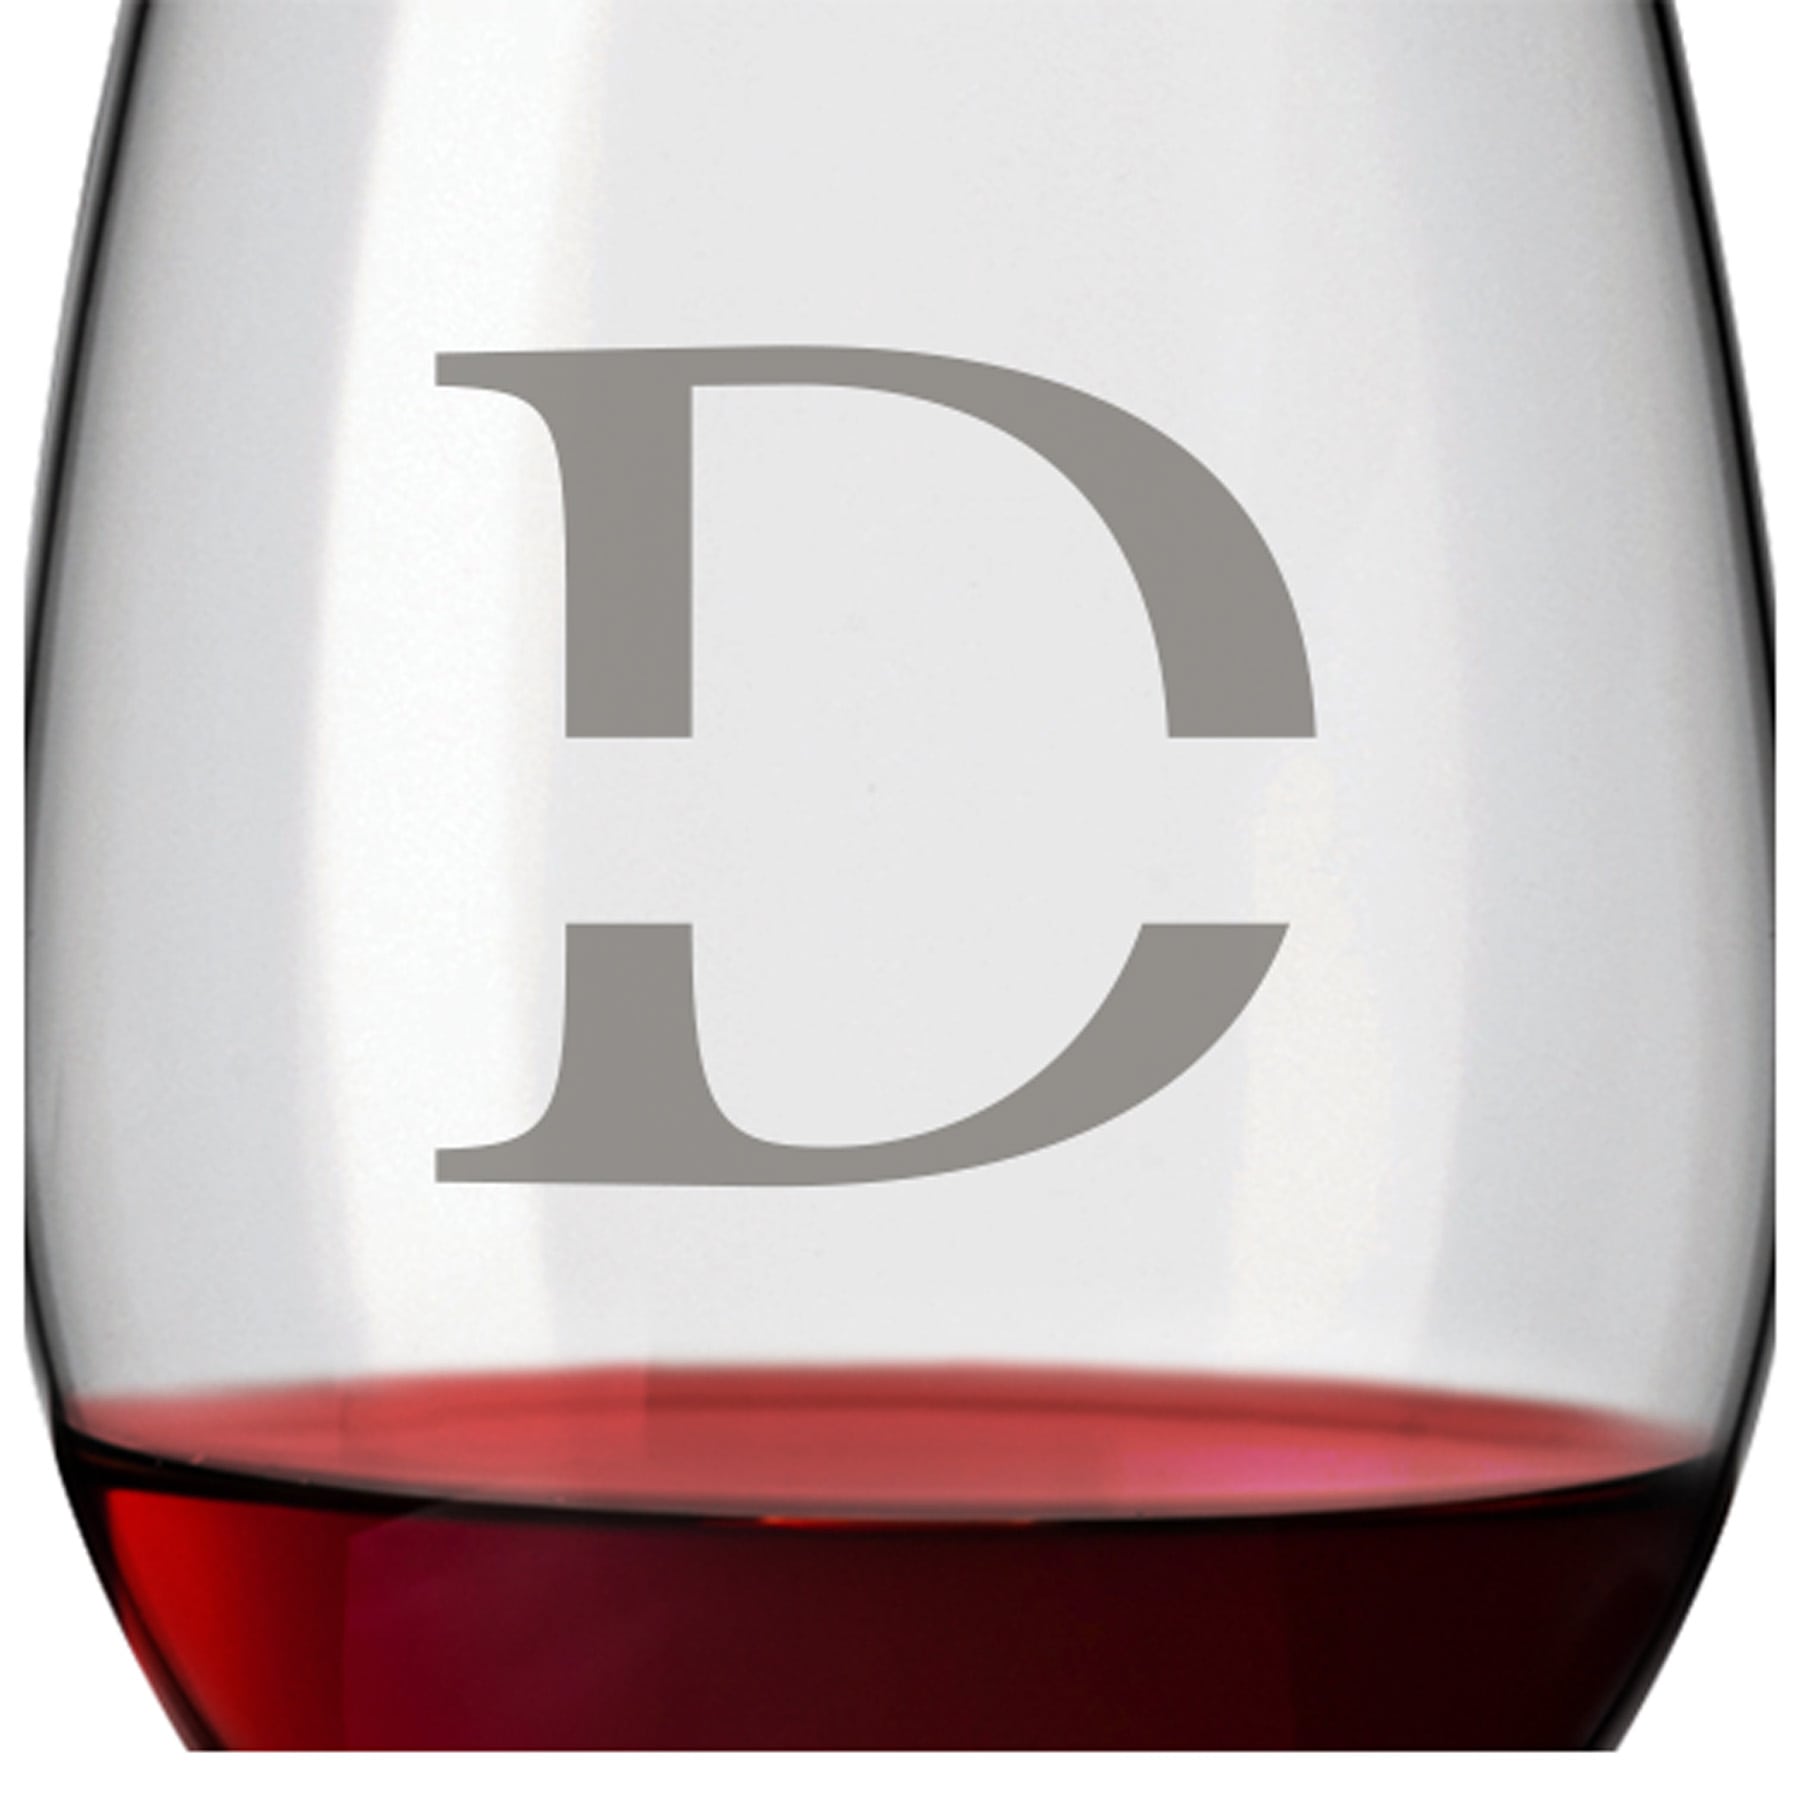 Leonardo Bordeauxglas Rotweinglas DAILY 640ml mit Namen oder Wunschtext graviert (Initialen)